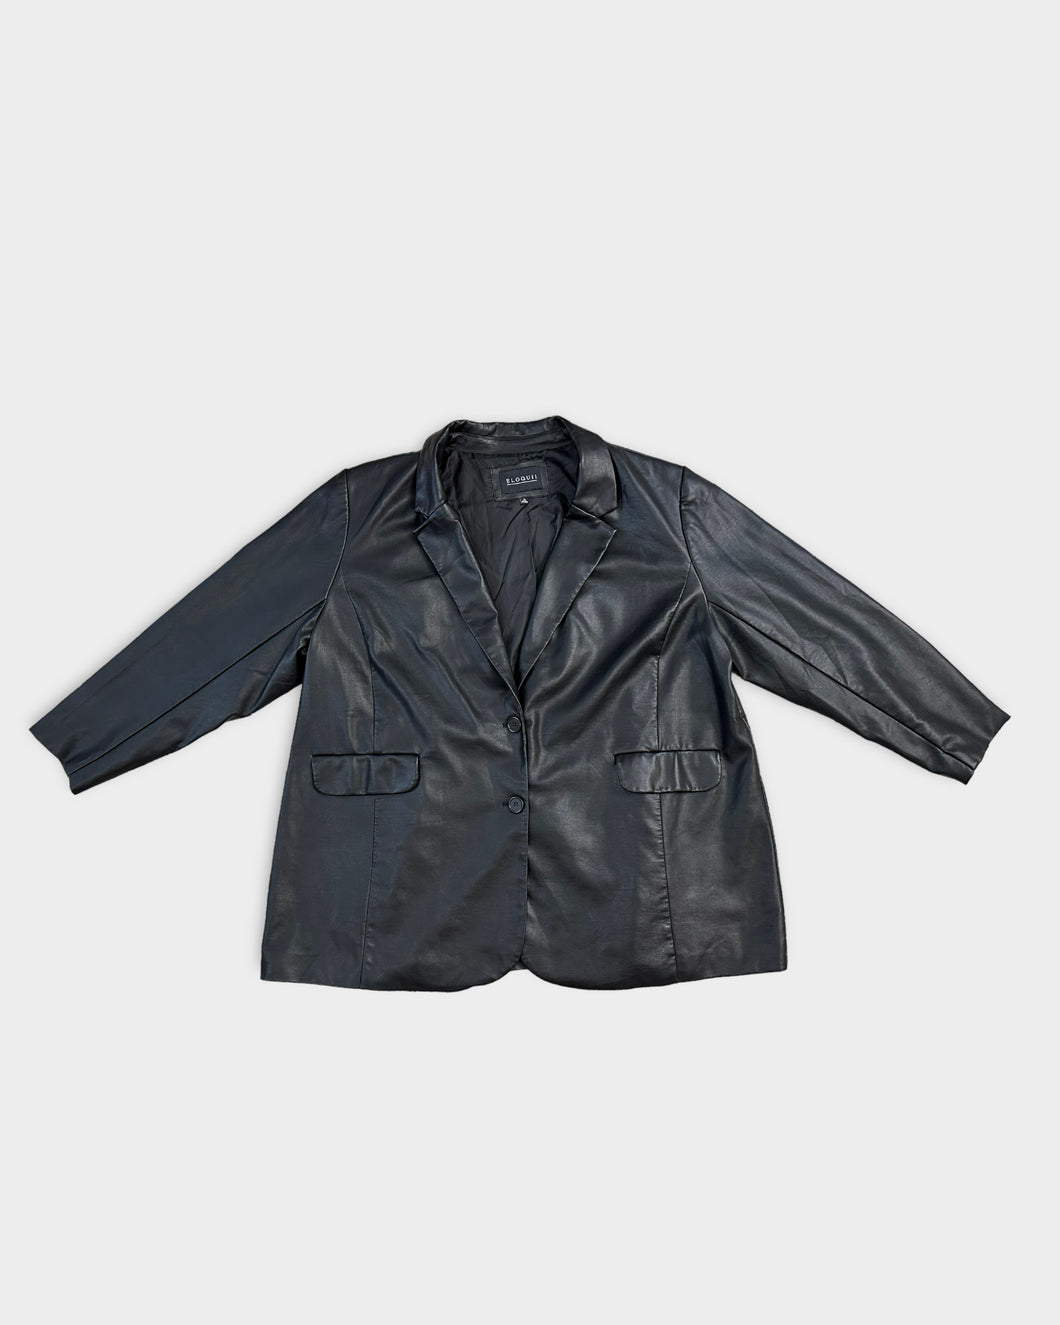 Eloquii Black Faux Leather Blazer (26)